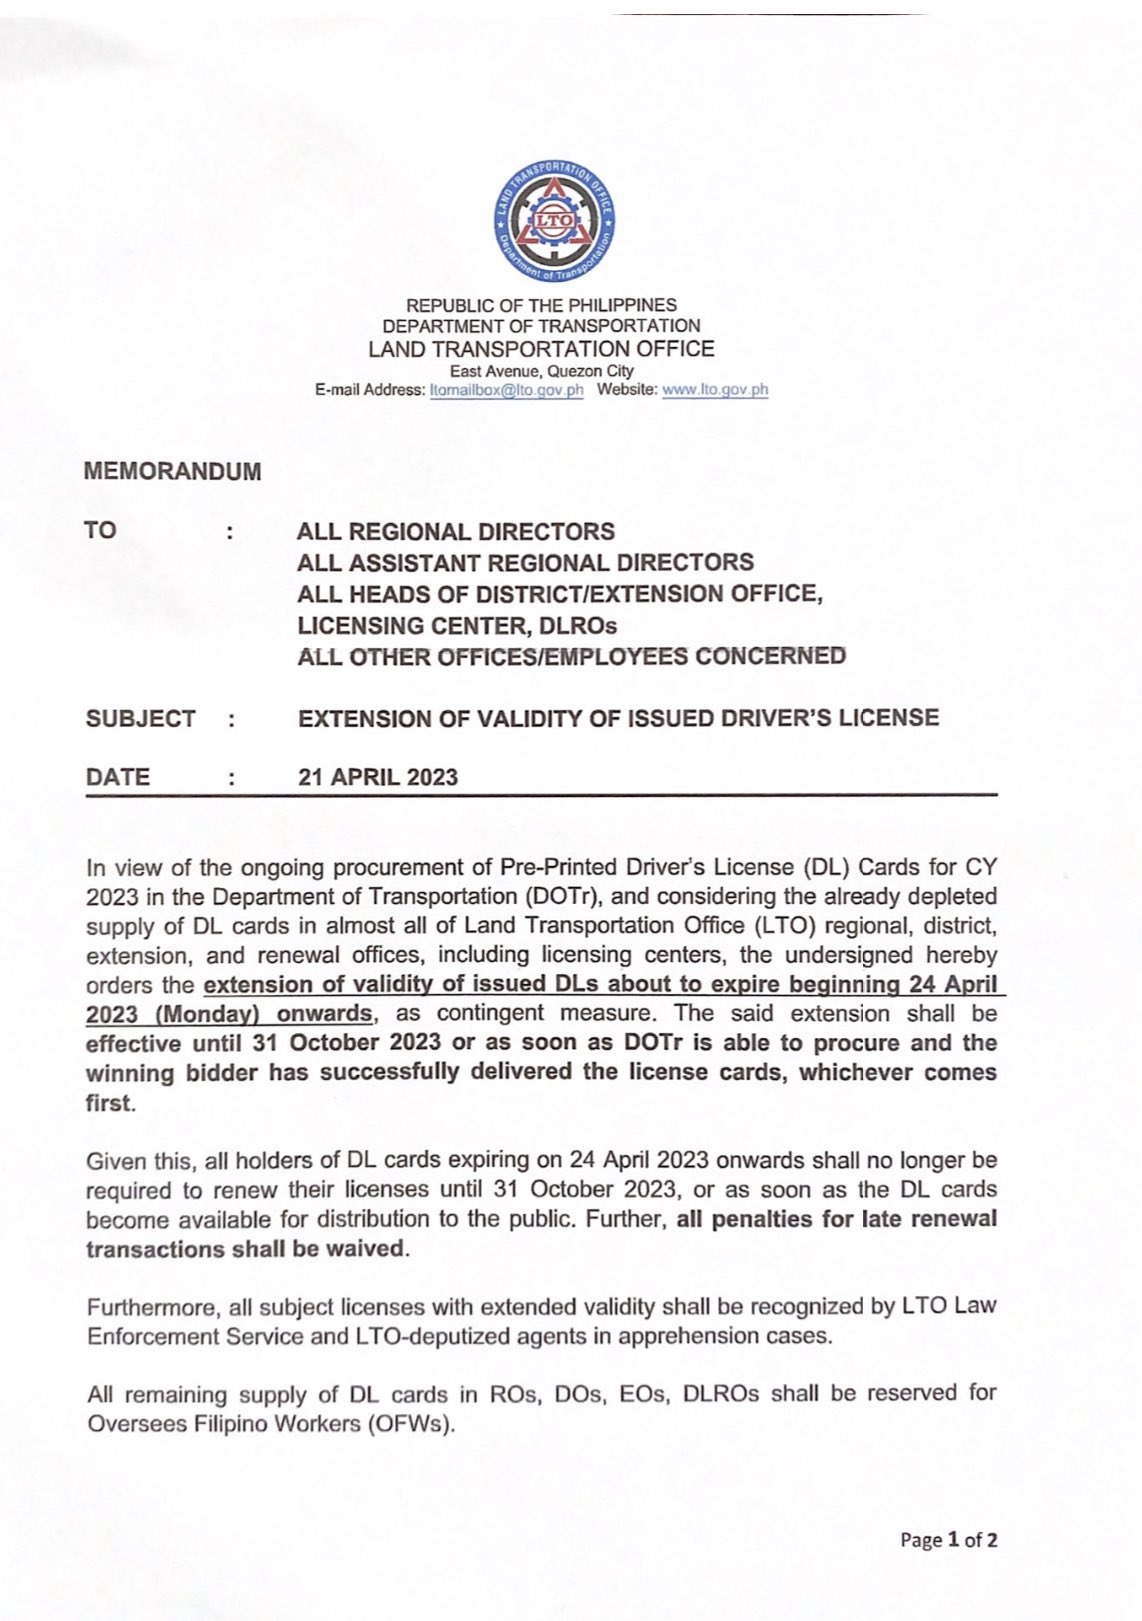 LTO memorandum on extension of driver’s license validity